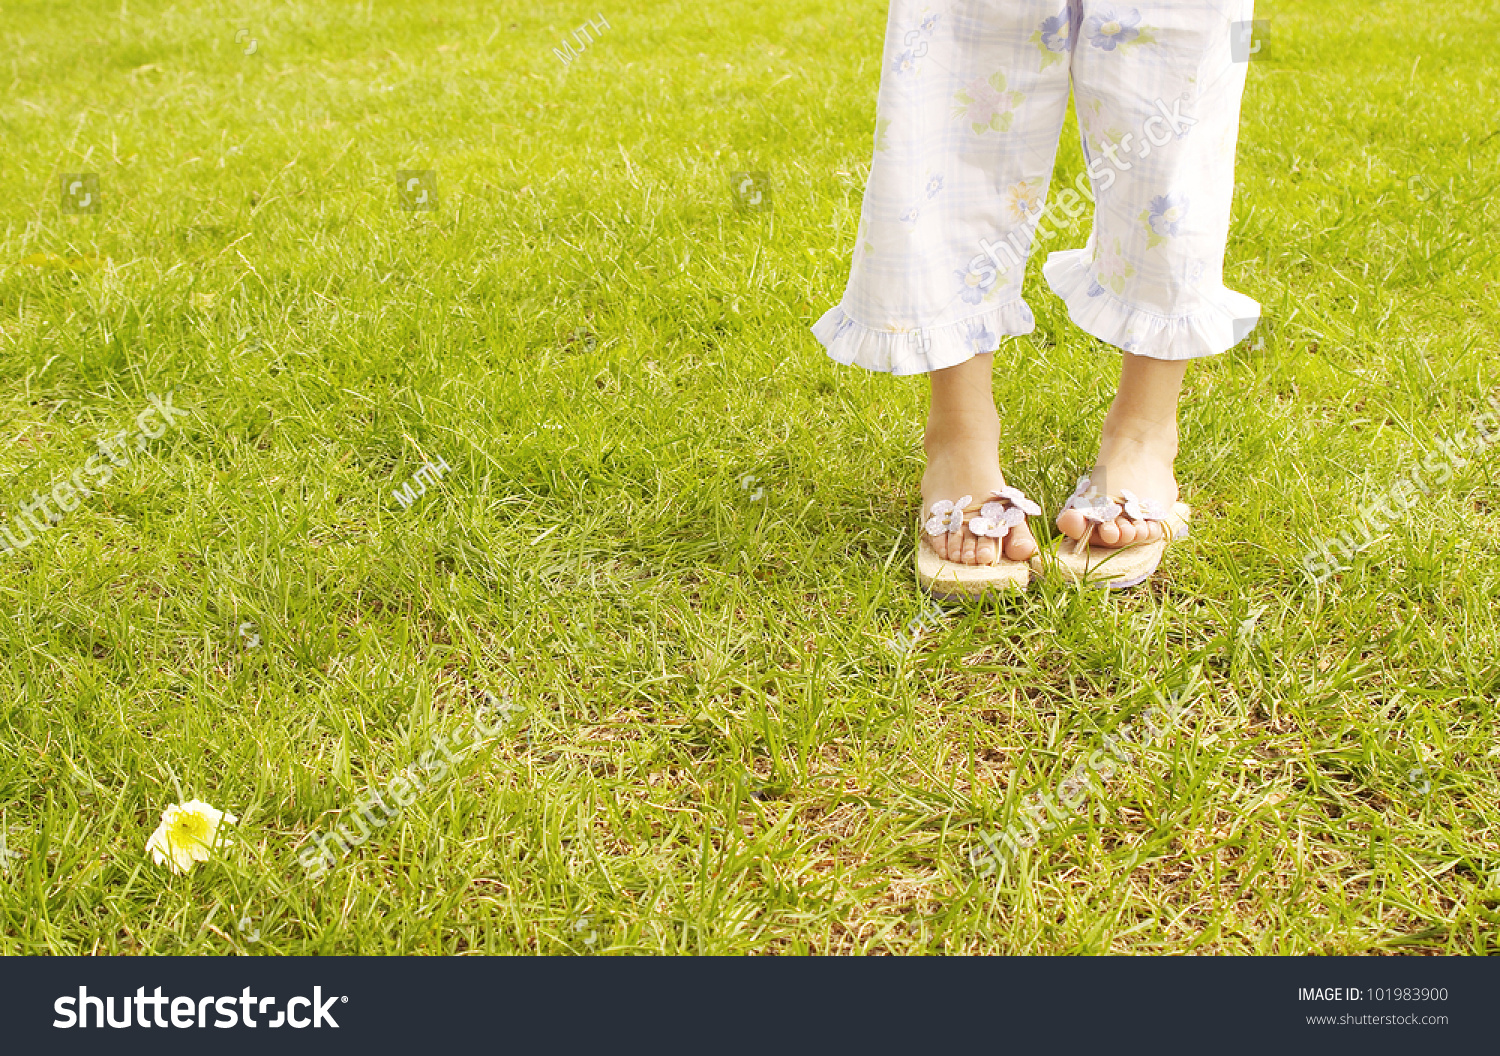 Young Girls Feet Wearing Summer Sandals Stock Photo 101983900 ...